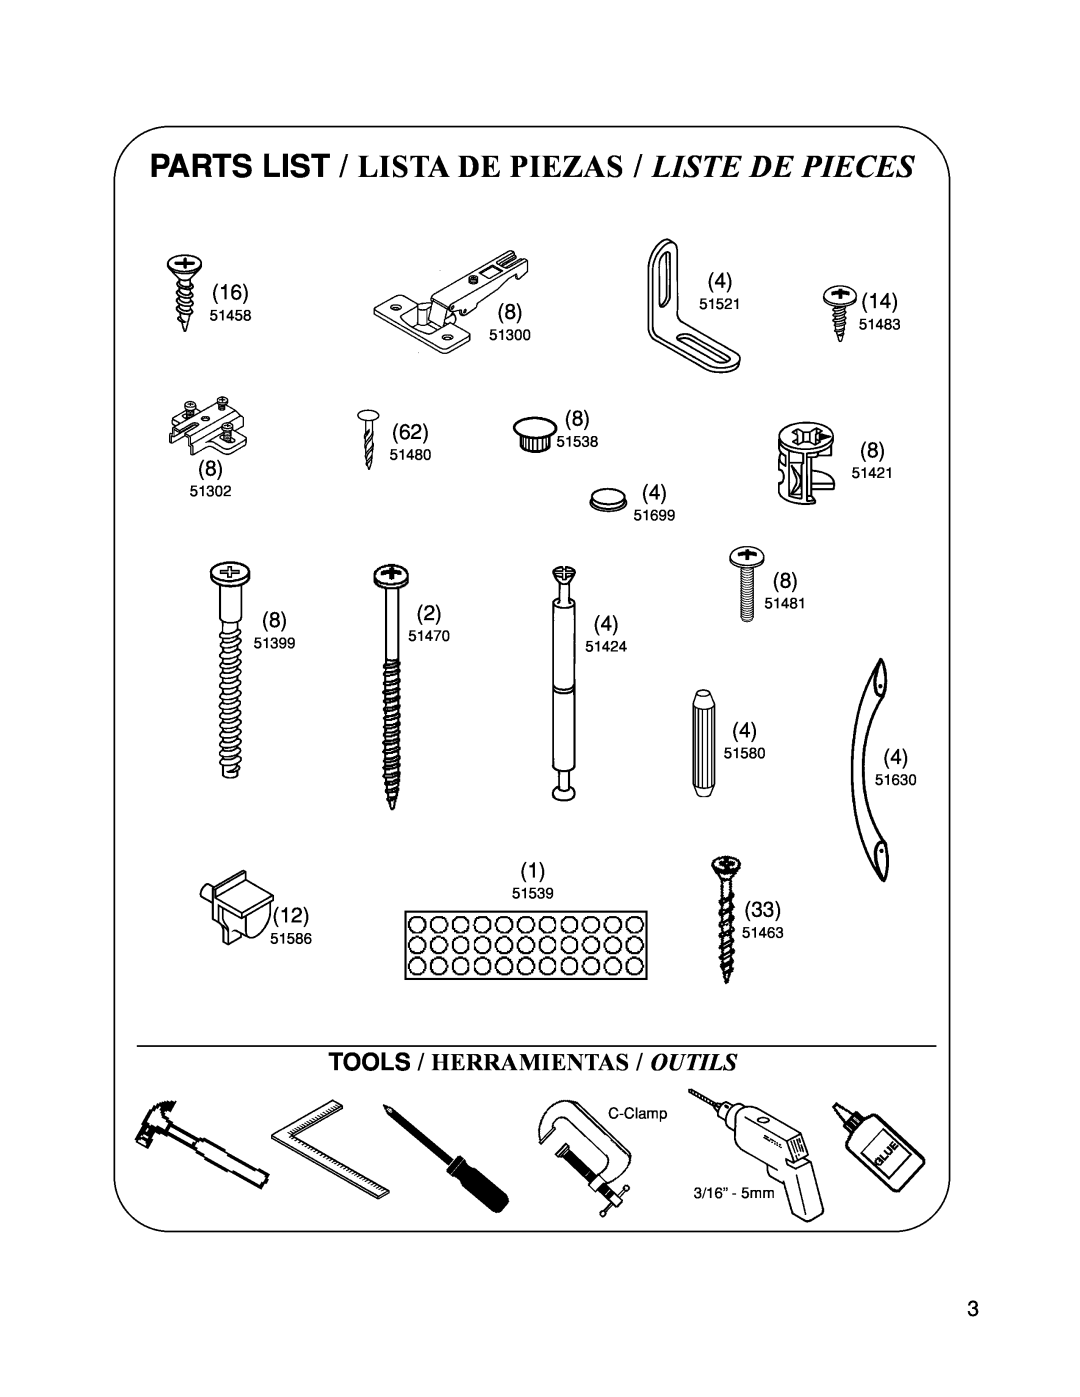 Closet Maid 12323 manual Tools / Herramientas / Outils, Parts List / Lista De Piezas / Liste De Pieces 